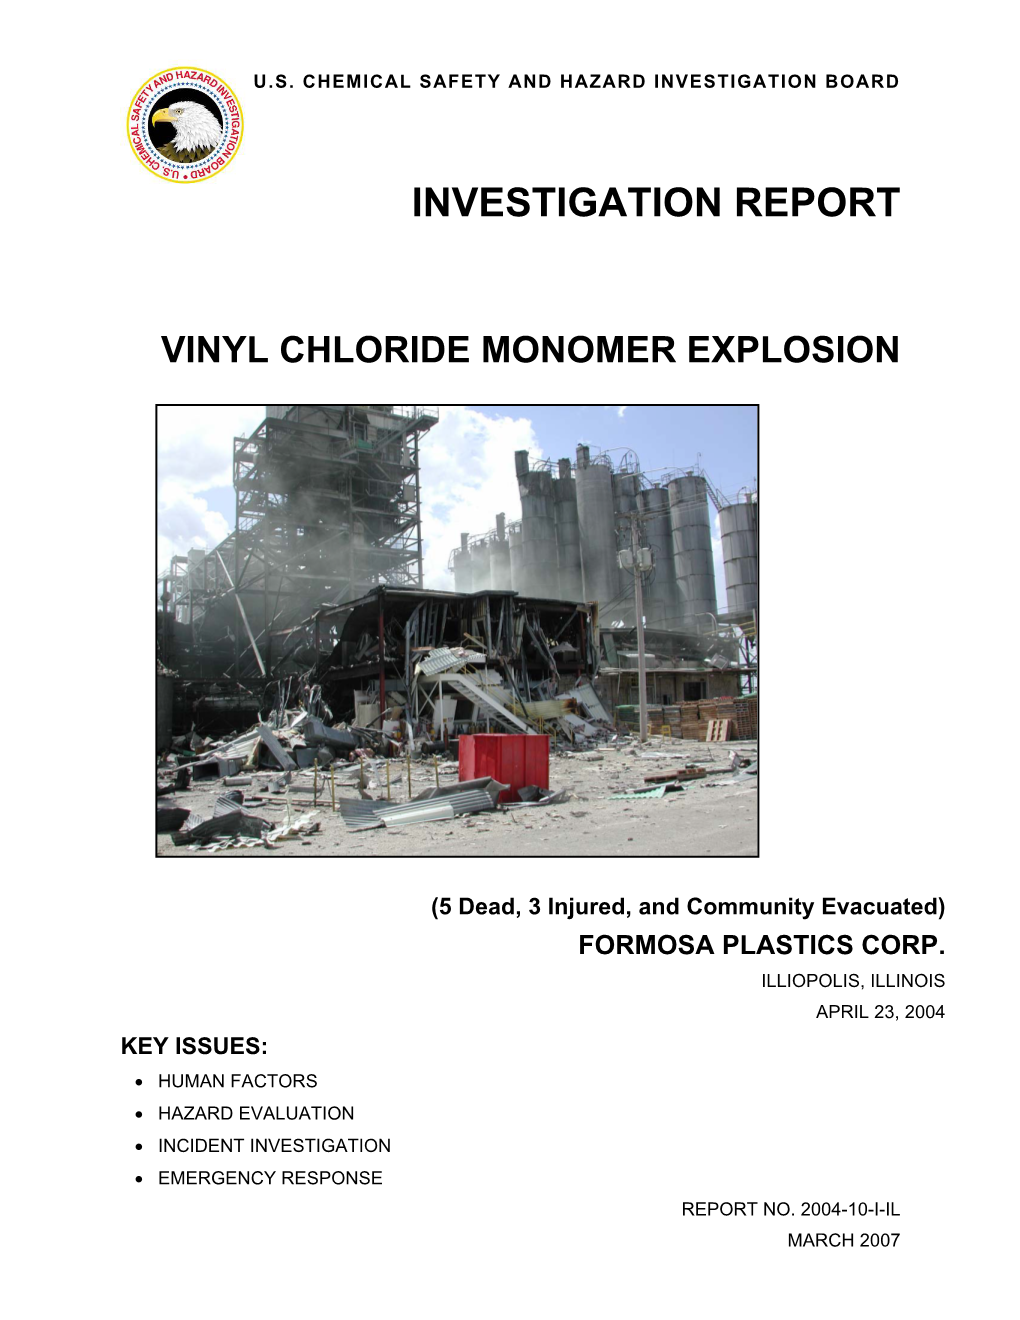 Formosa Plastics Corp. Illiopolis, Illinois April 23, 2004 Key Issues: • Human Factors • Hazard Evaluation • Incident Investigation • Emergency Response Report No